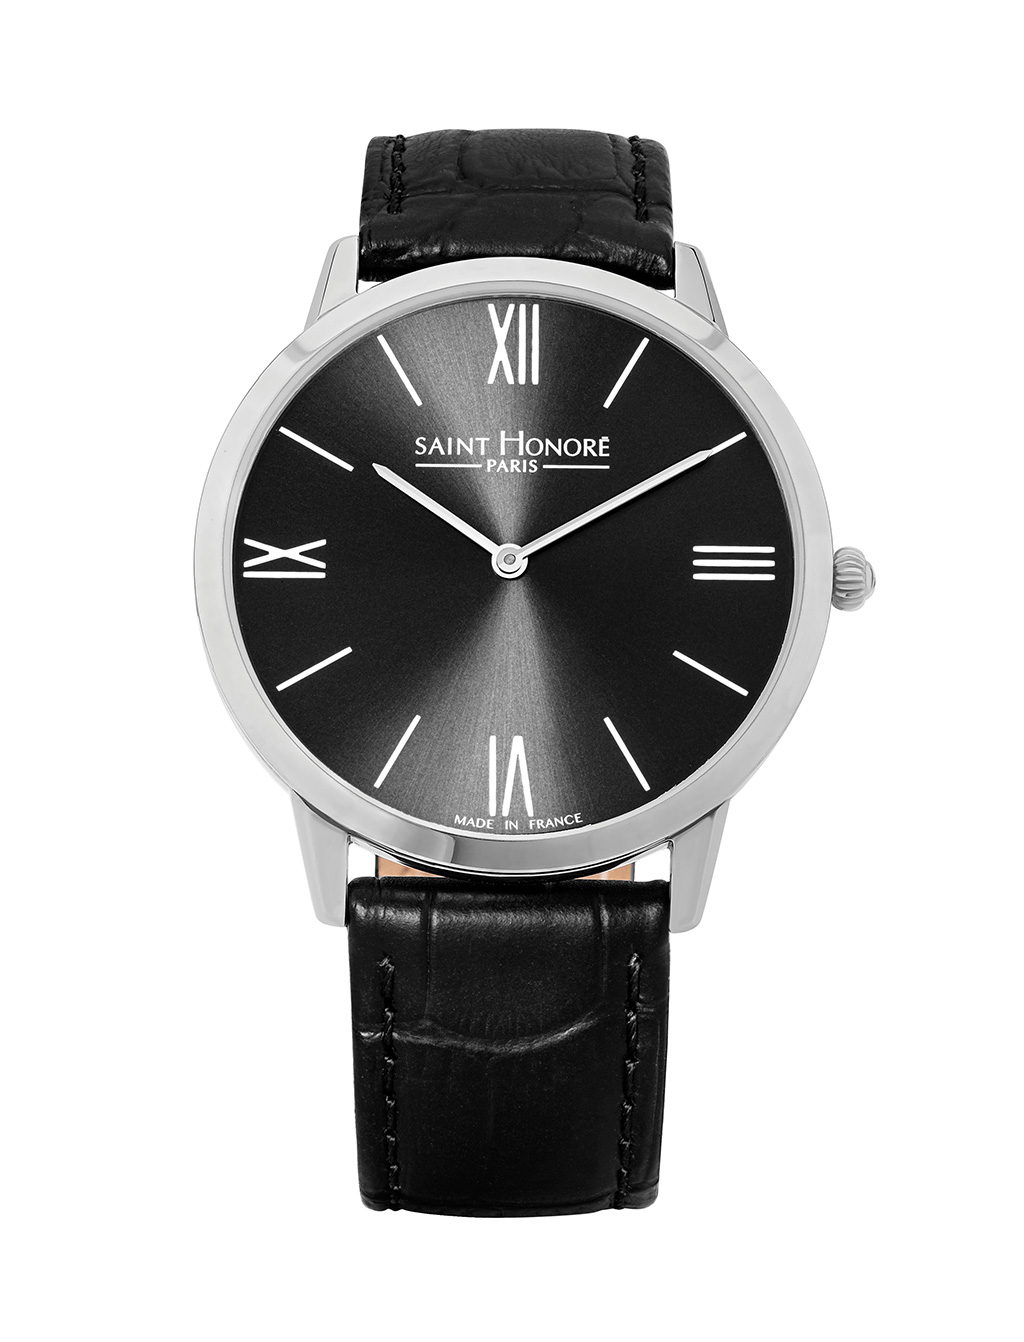 WAGRAM Men's watch - Stainless steel case, black leather strap